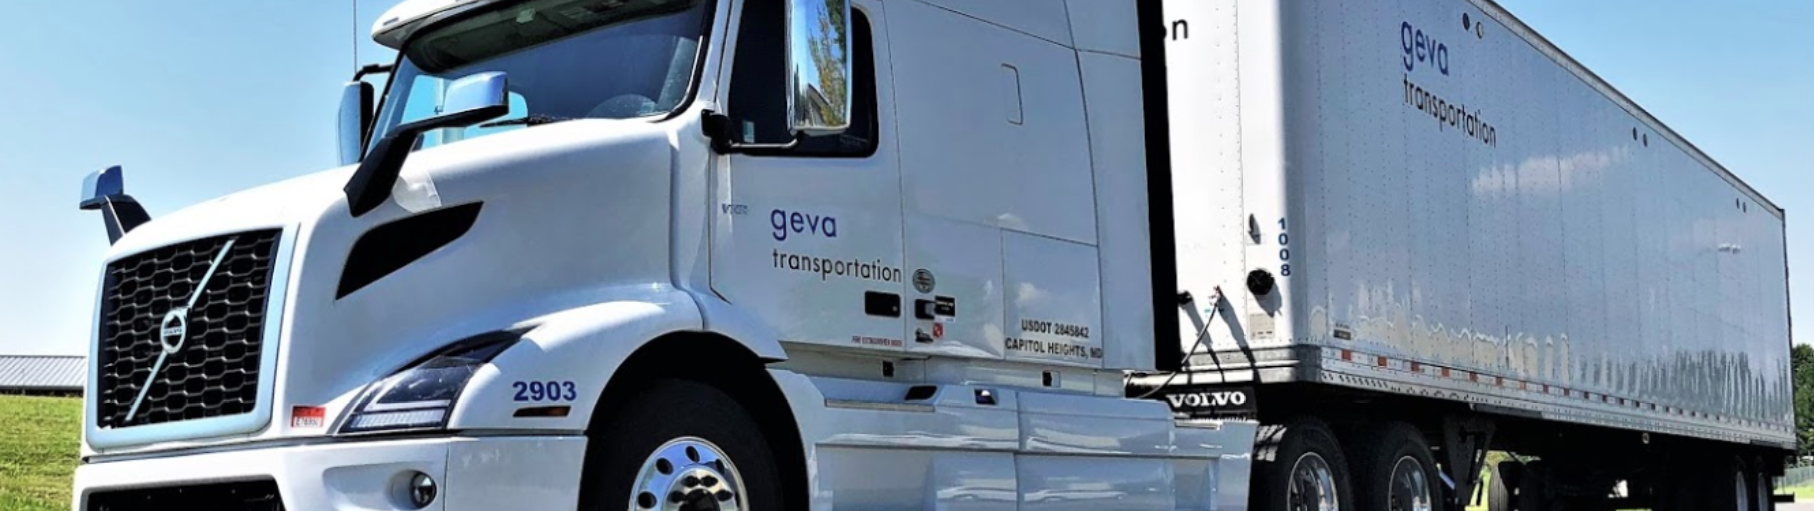 Geva trailer truck